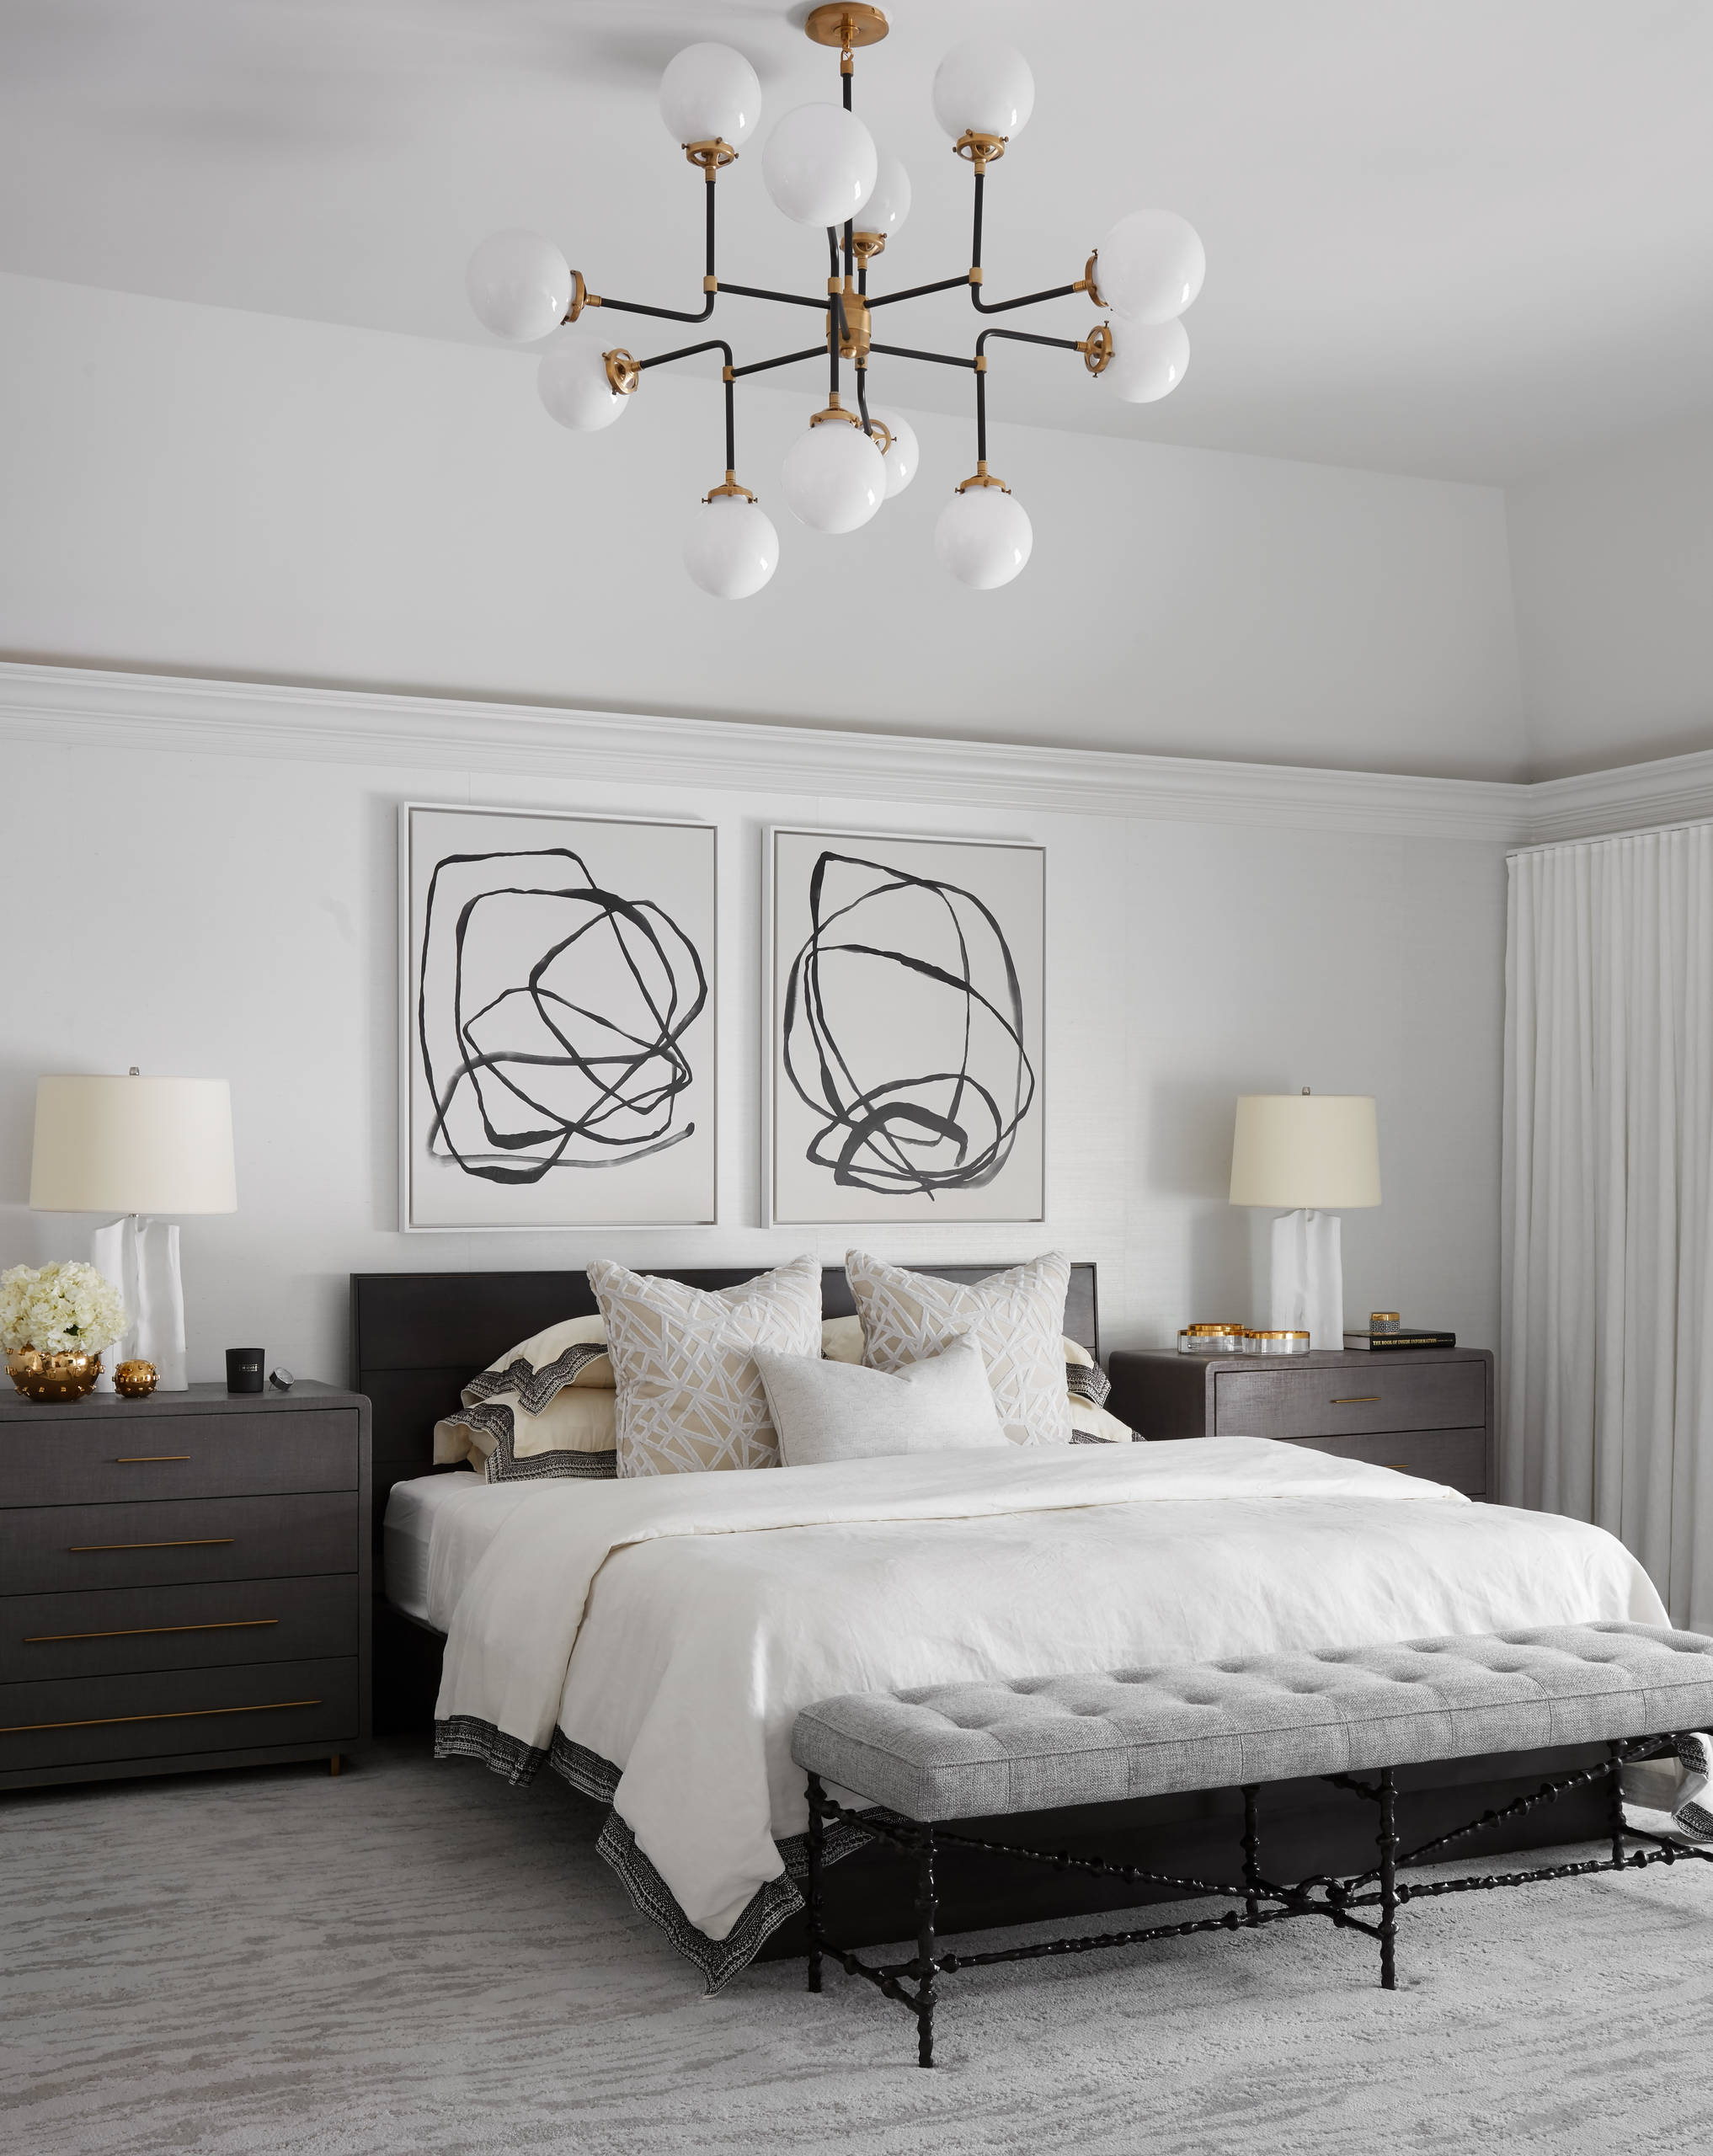 75 Master Bedroom Ideas You'll Love - January, 2023 | Houzz